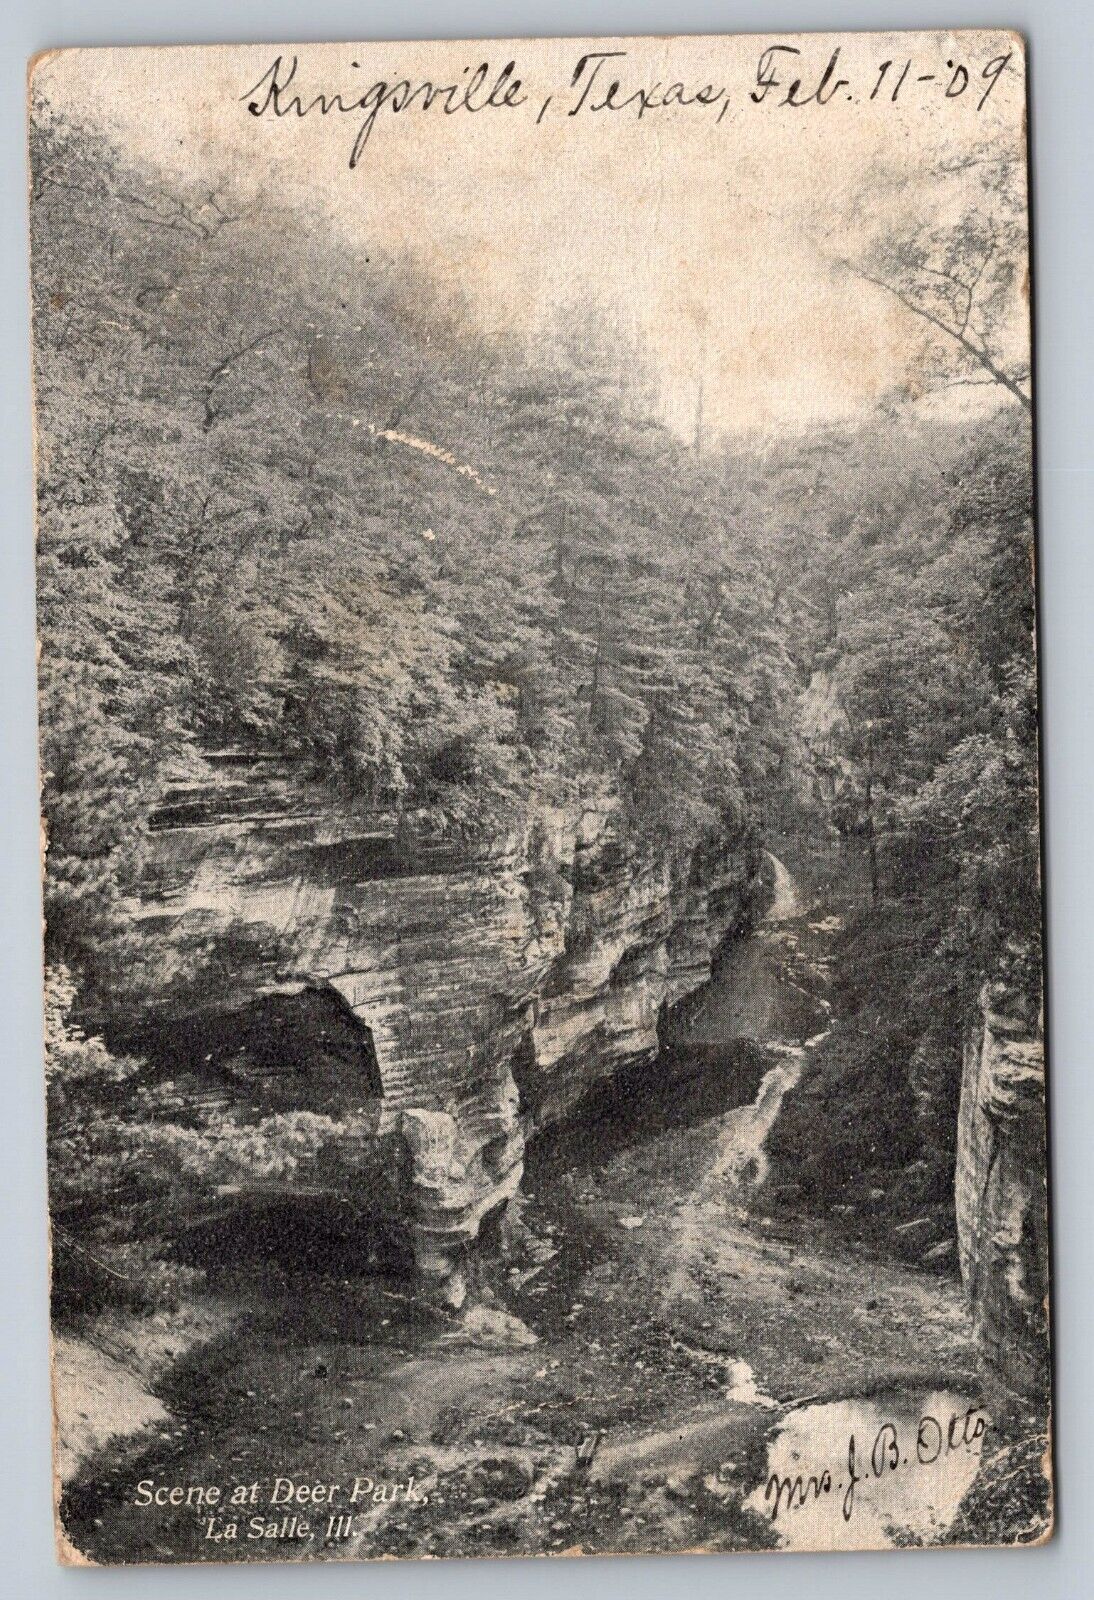 Postcard LA SALLE ILLINOIS Scene at Deer Park (now Mathiessen SP) Wooded canyon